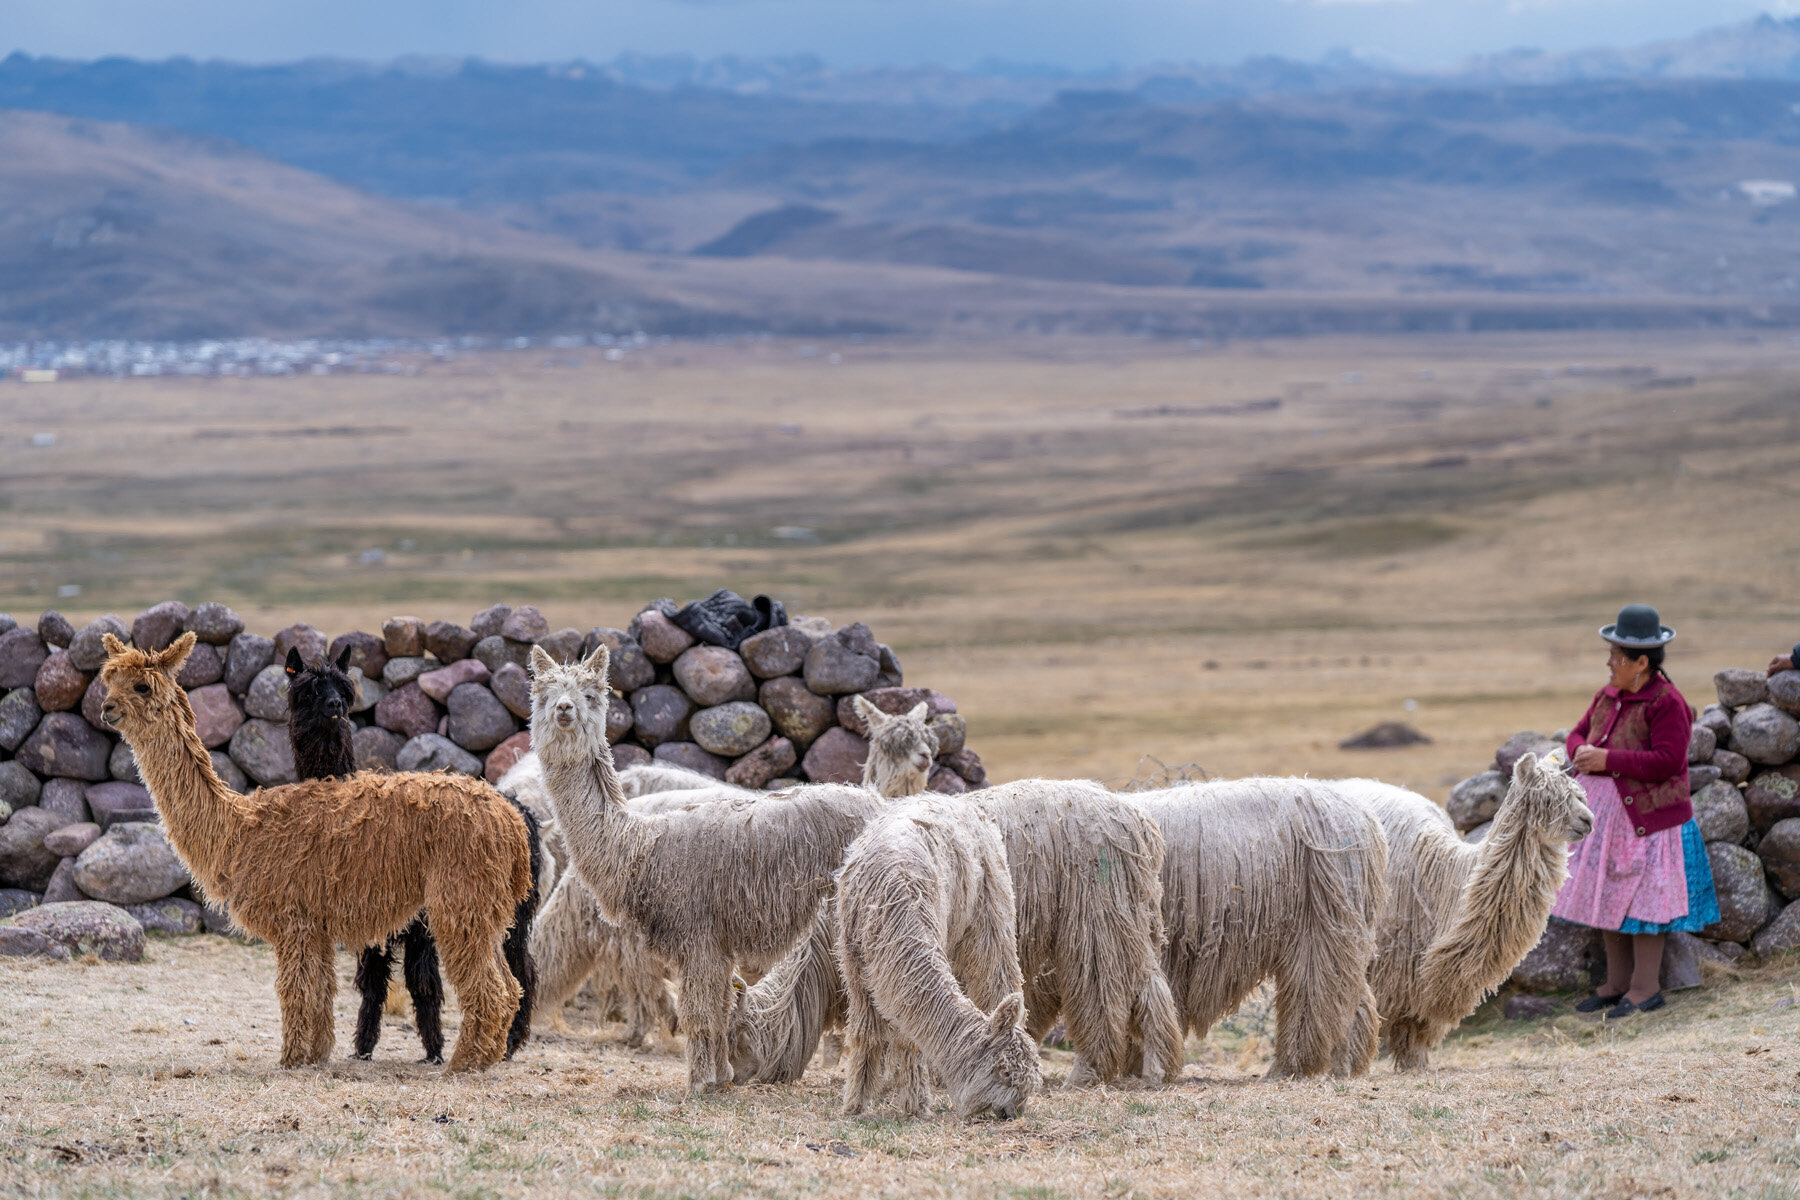 209_Wasim Muklashy Photography_Andes Mountains_Peru_Quechua Benefit_Picotani_Spar_Macusani_Alpaca.jpg